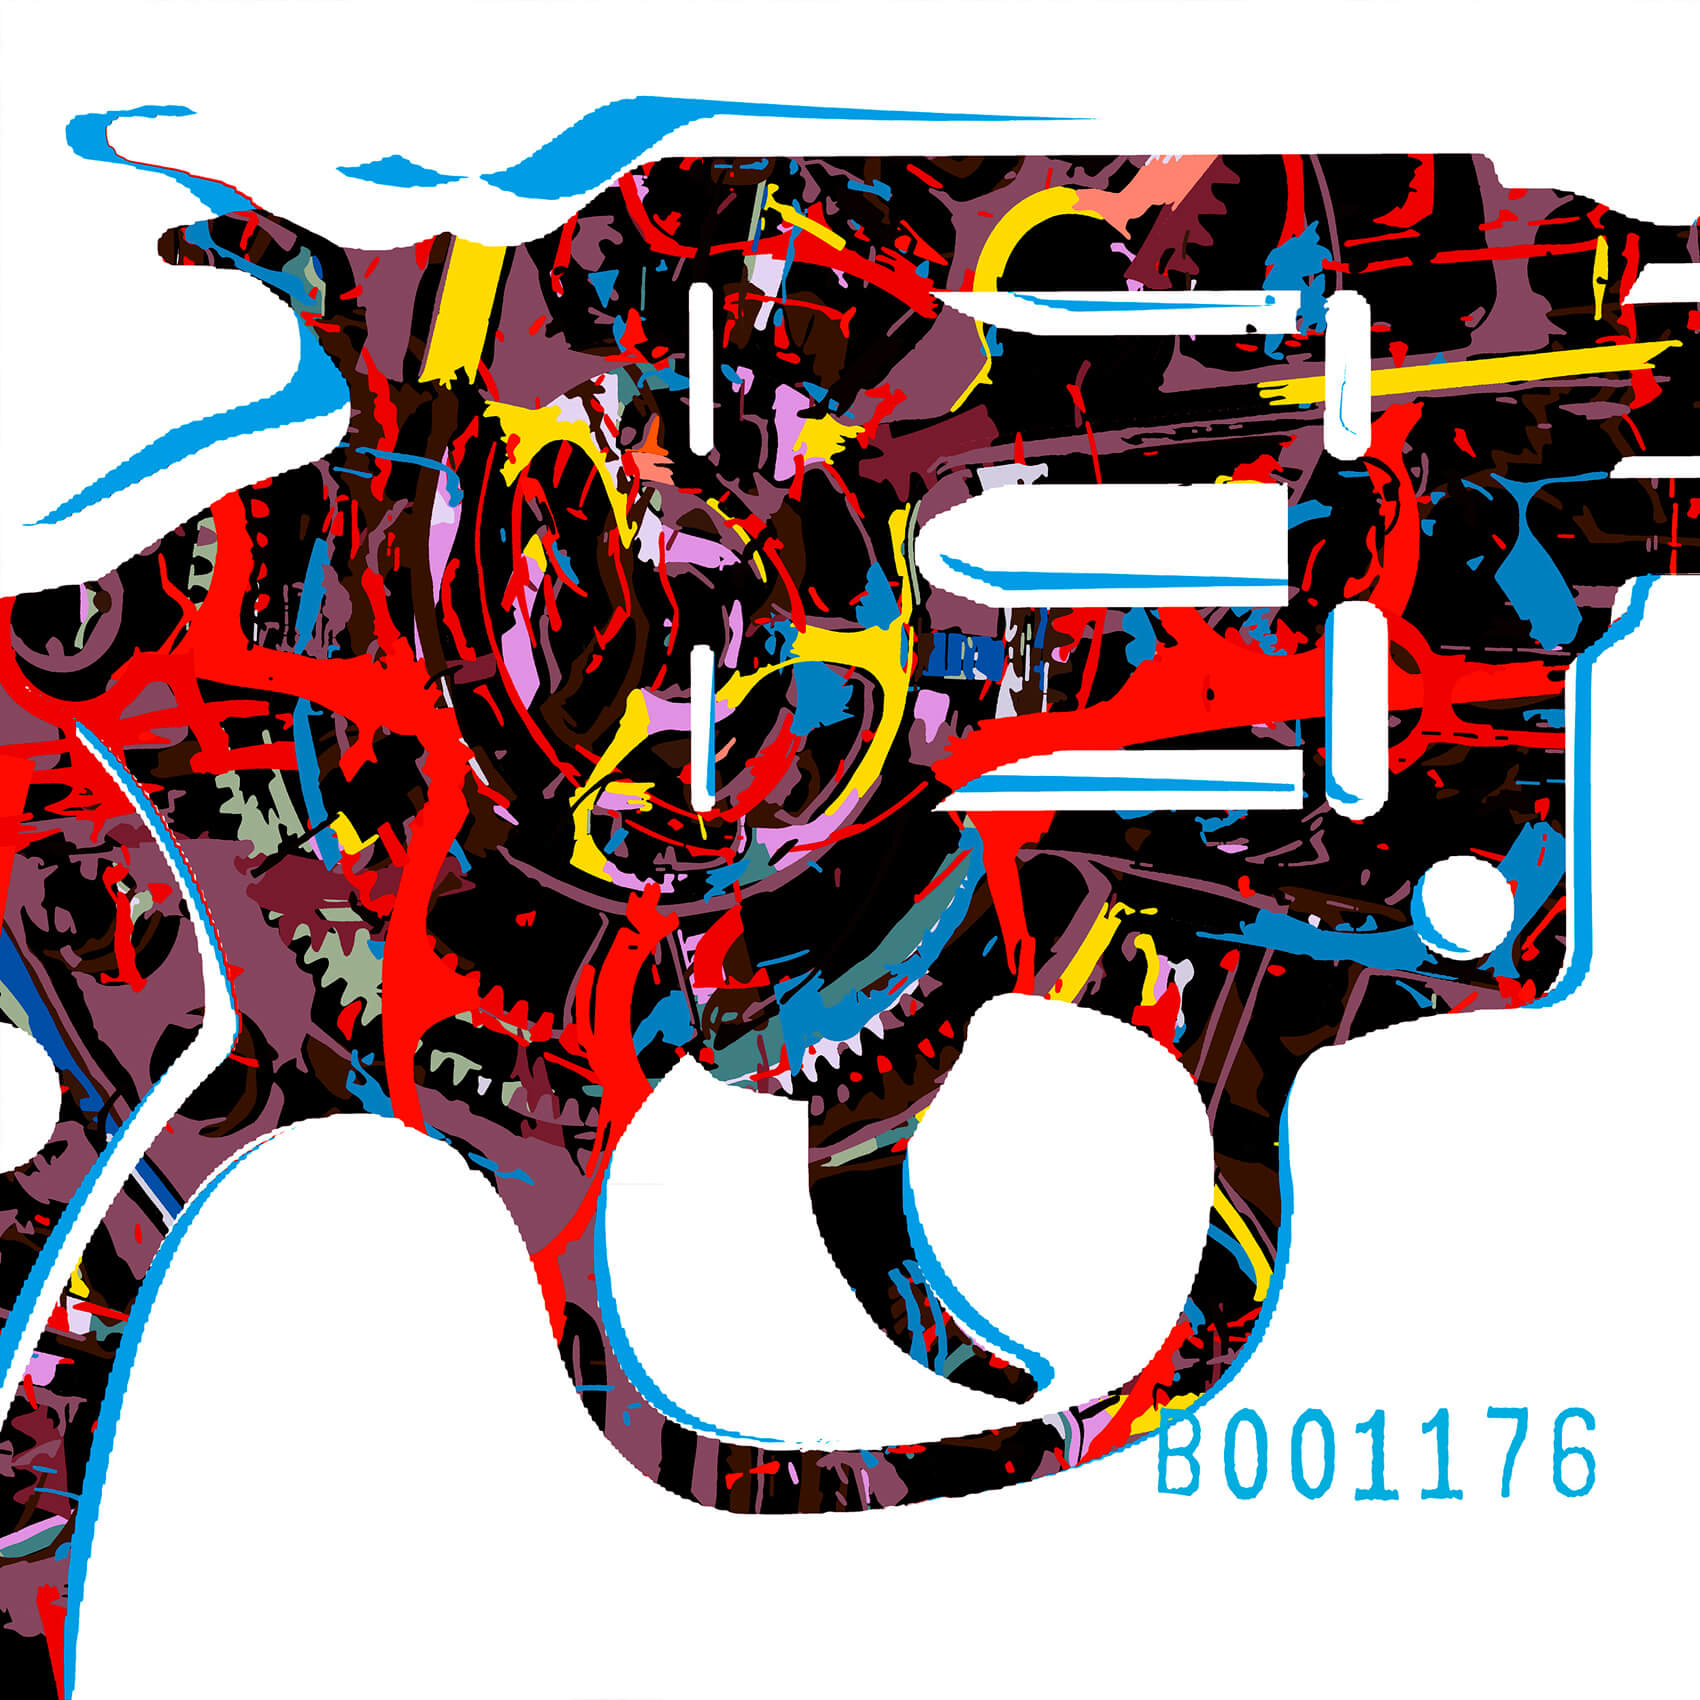 GUN-_464-coxwwDFDD-coCuiii